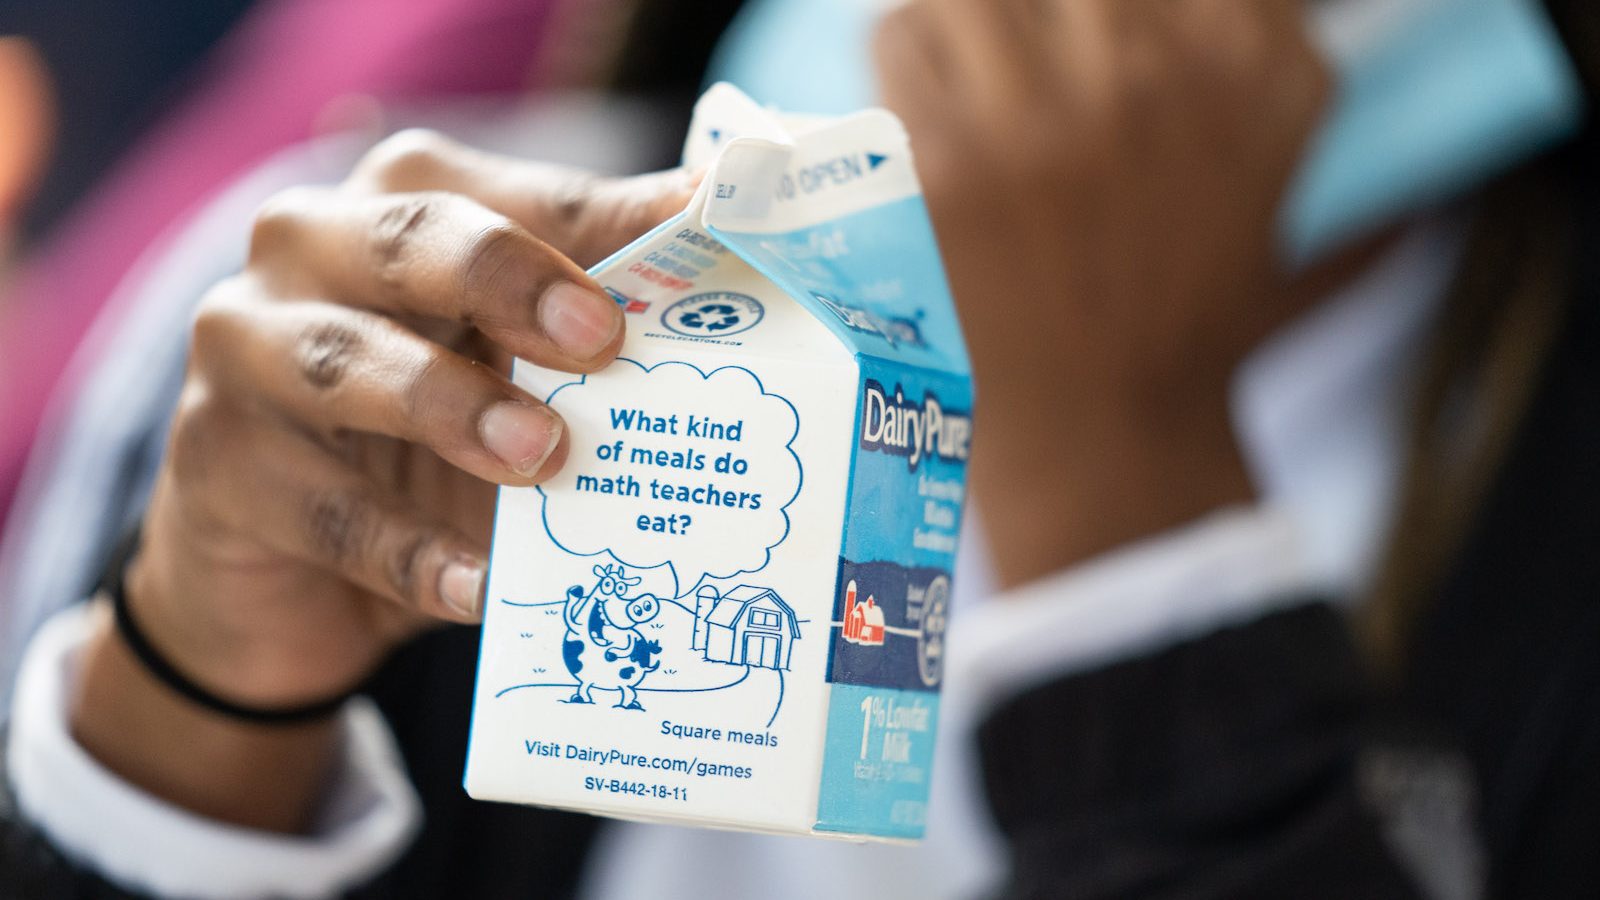 A student holds a milk carton